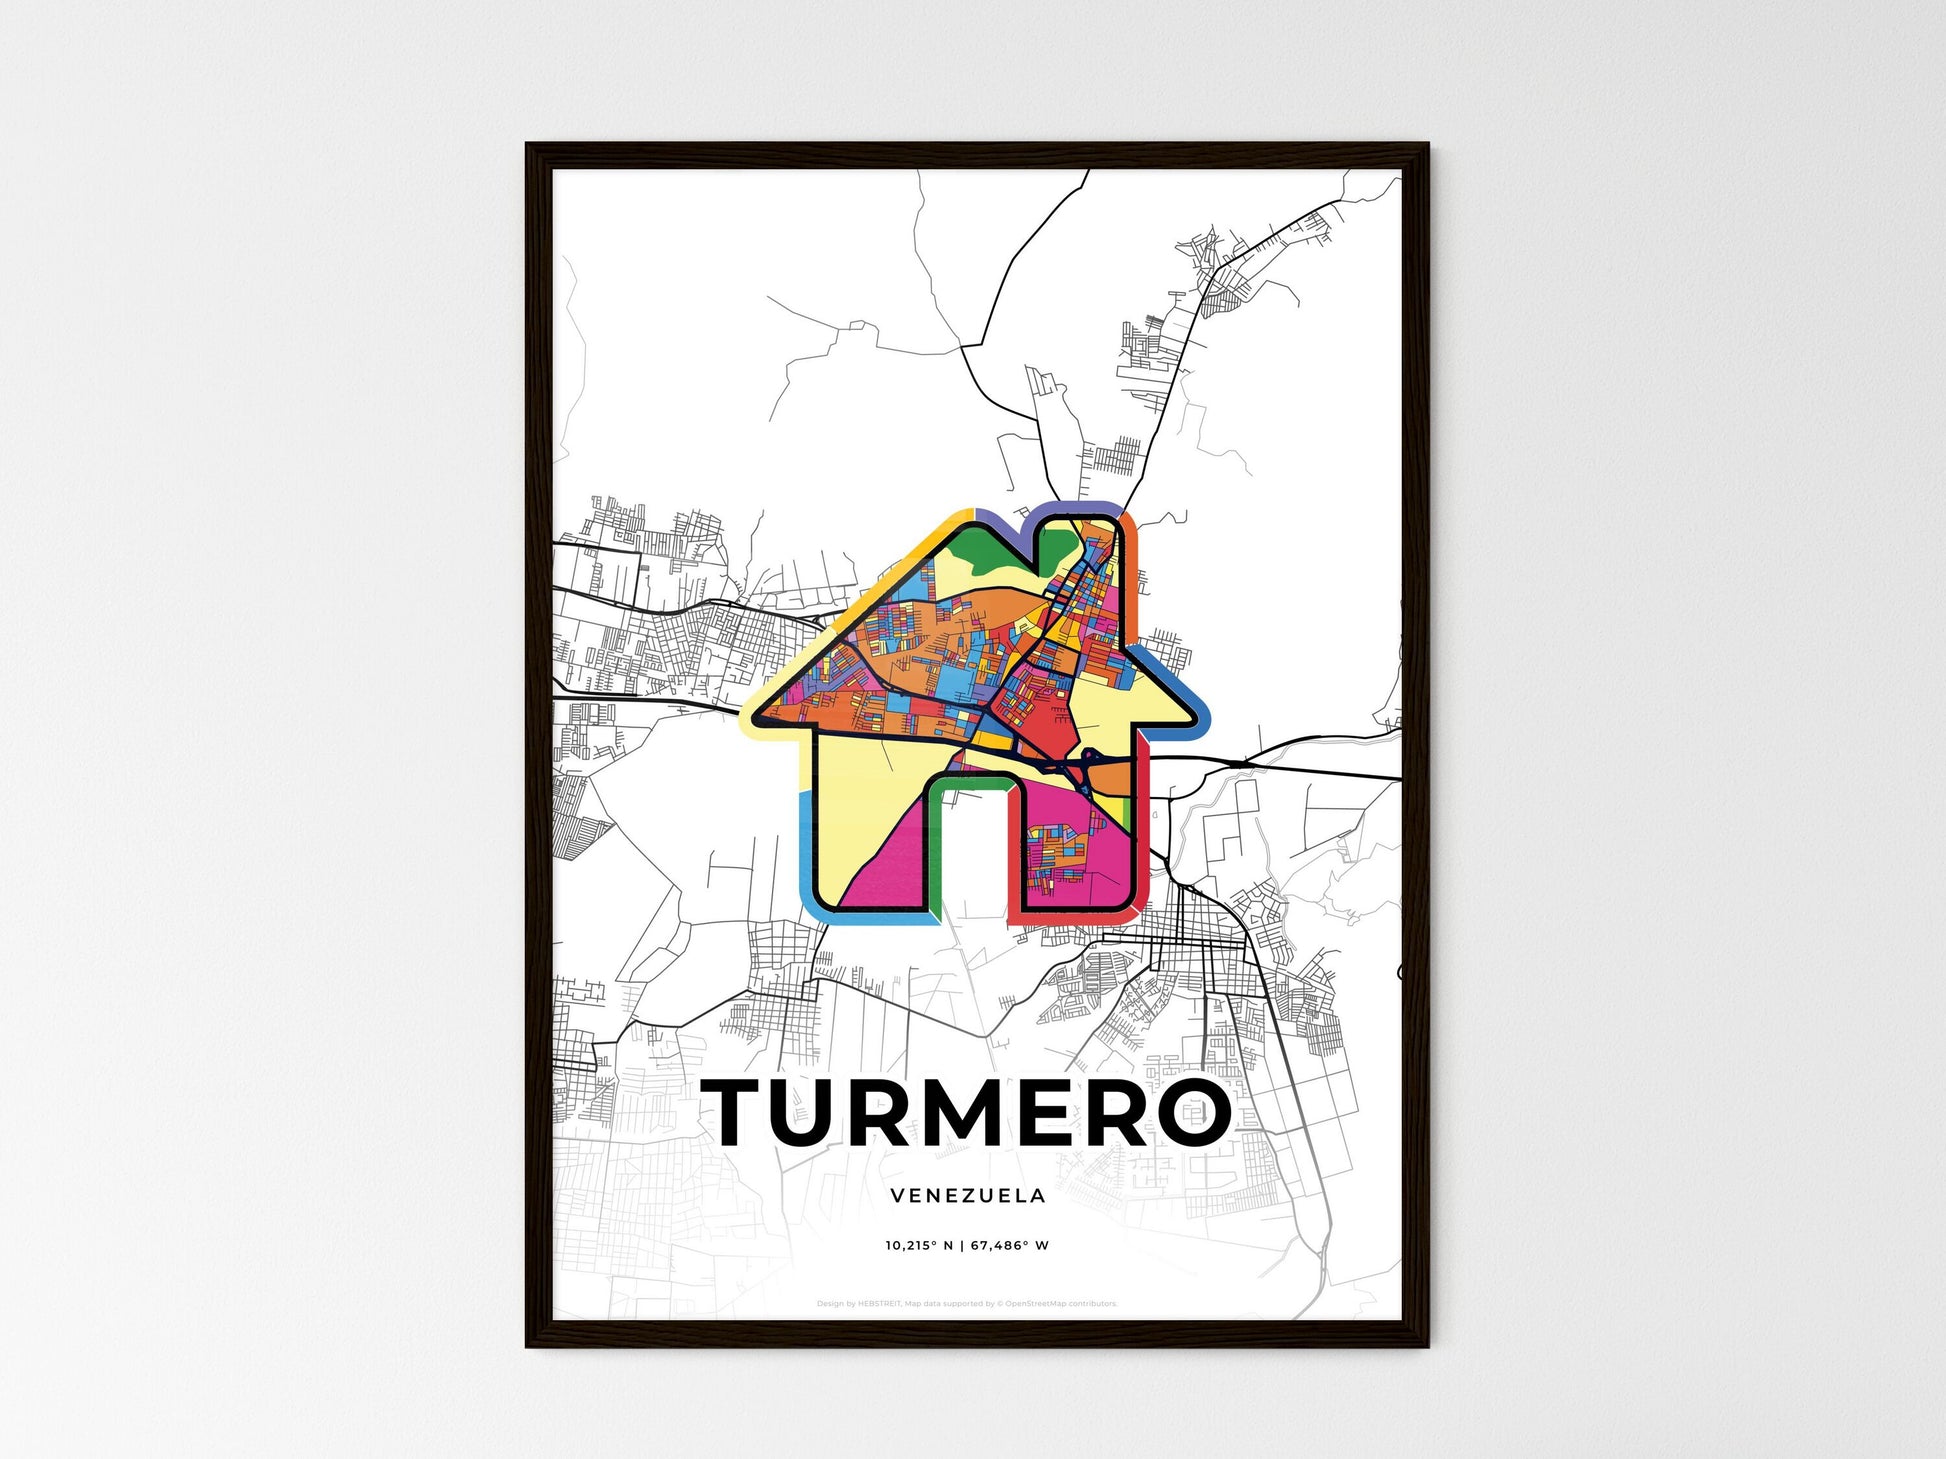 TURMERO VENEZUELA minimal art map with a colorful icon. Style 3